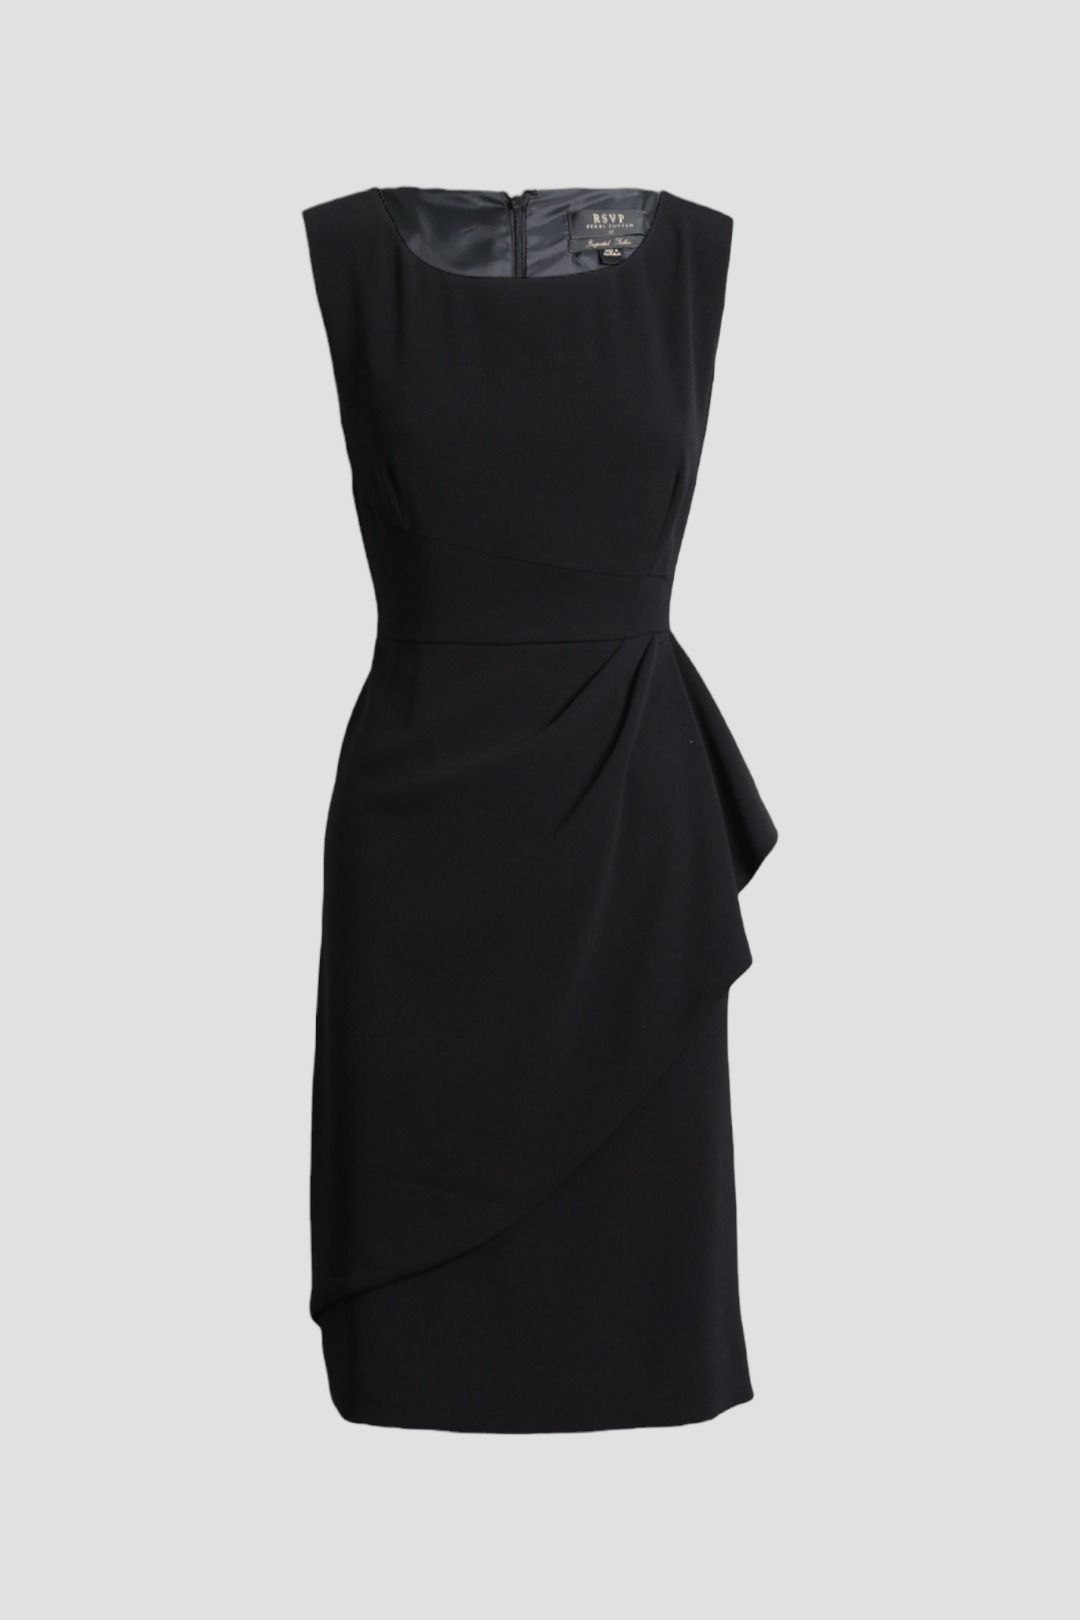 Perri Cutten - Sleeveless Knee Length Dress in Black